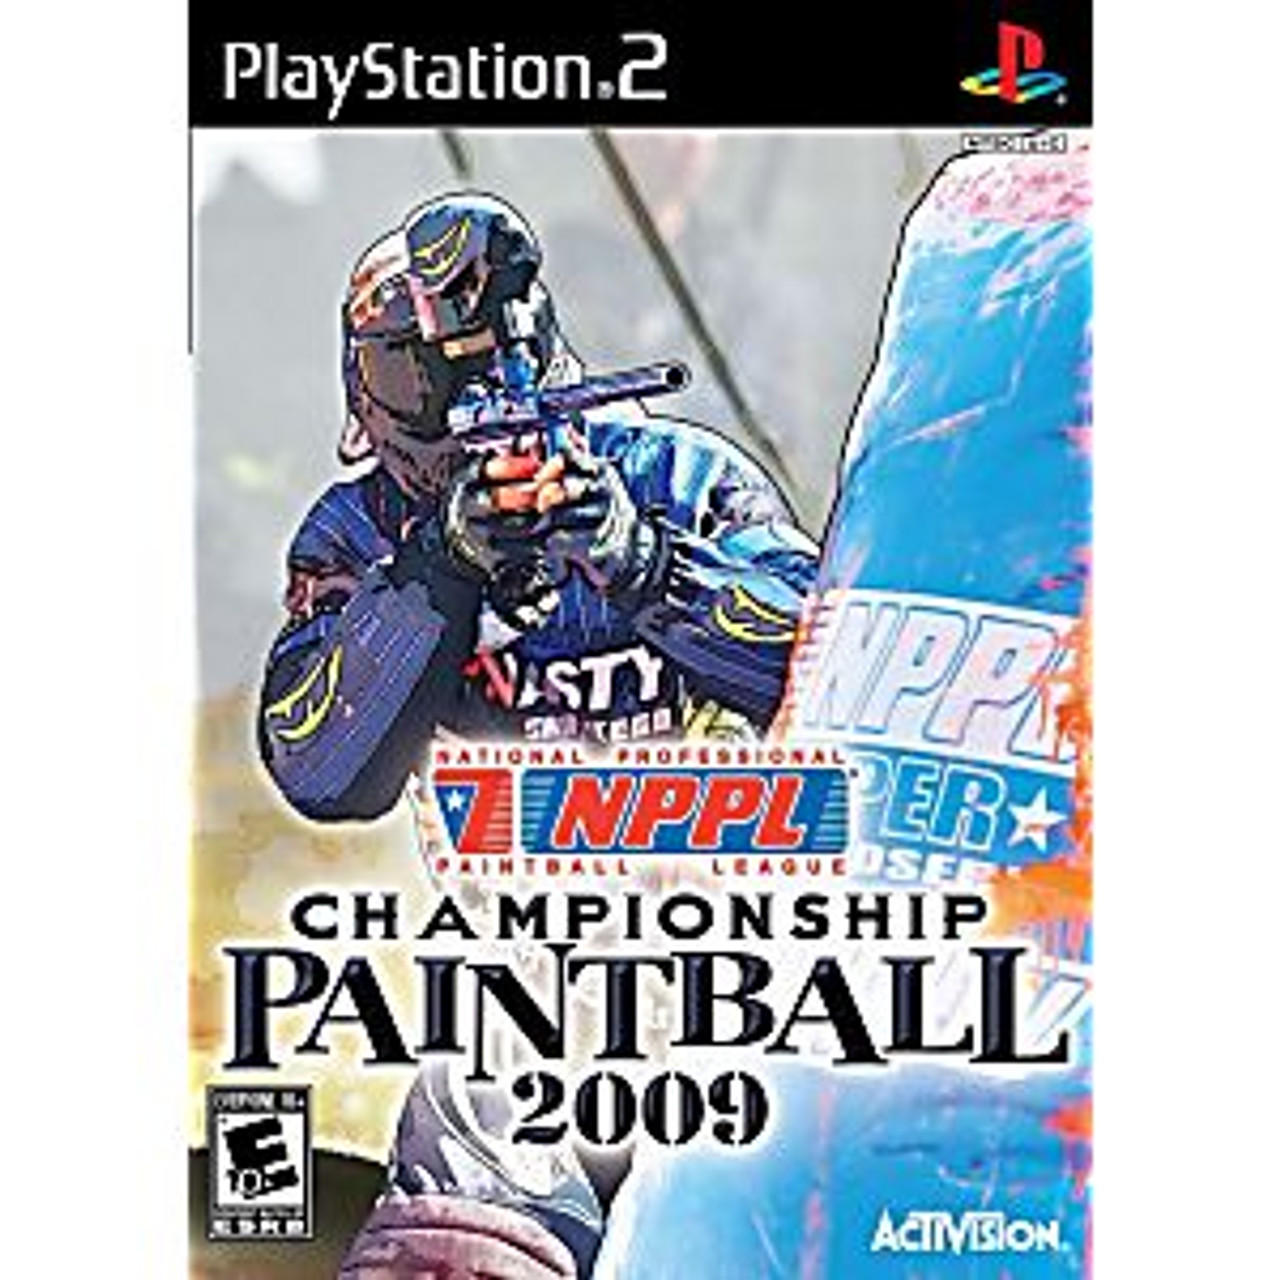 NPPL CHAMPIONSHIP PAINTBALL 2009 - PS2